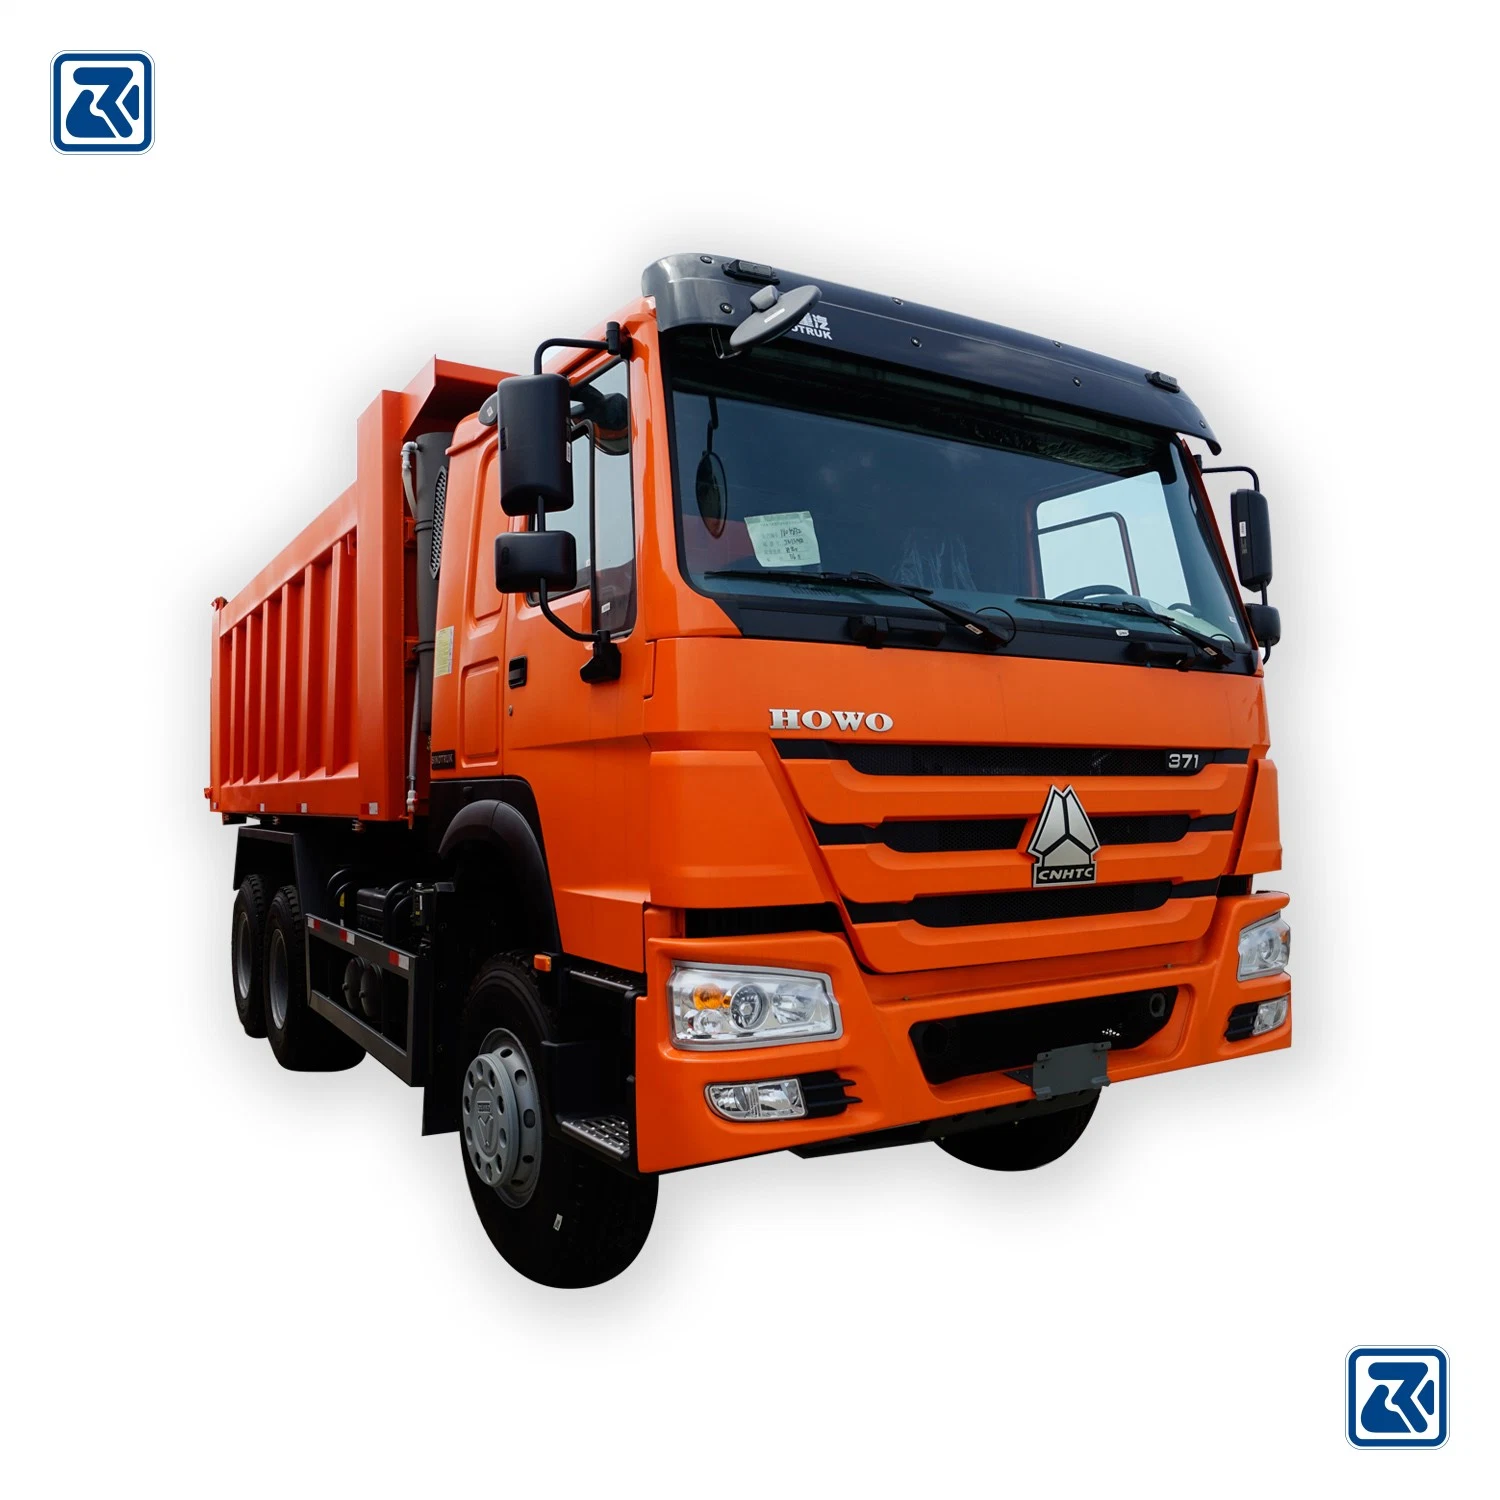 China Original Sino Truck Sinotruk Heavy Duty Truck/HOWO New 6X4 10 Wheels 371HP Tipper/Dumper/Dump Truck Price for Mining/Mine/Ethiopia